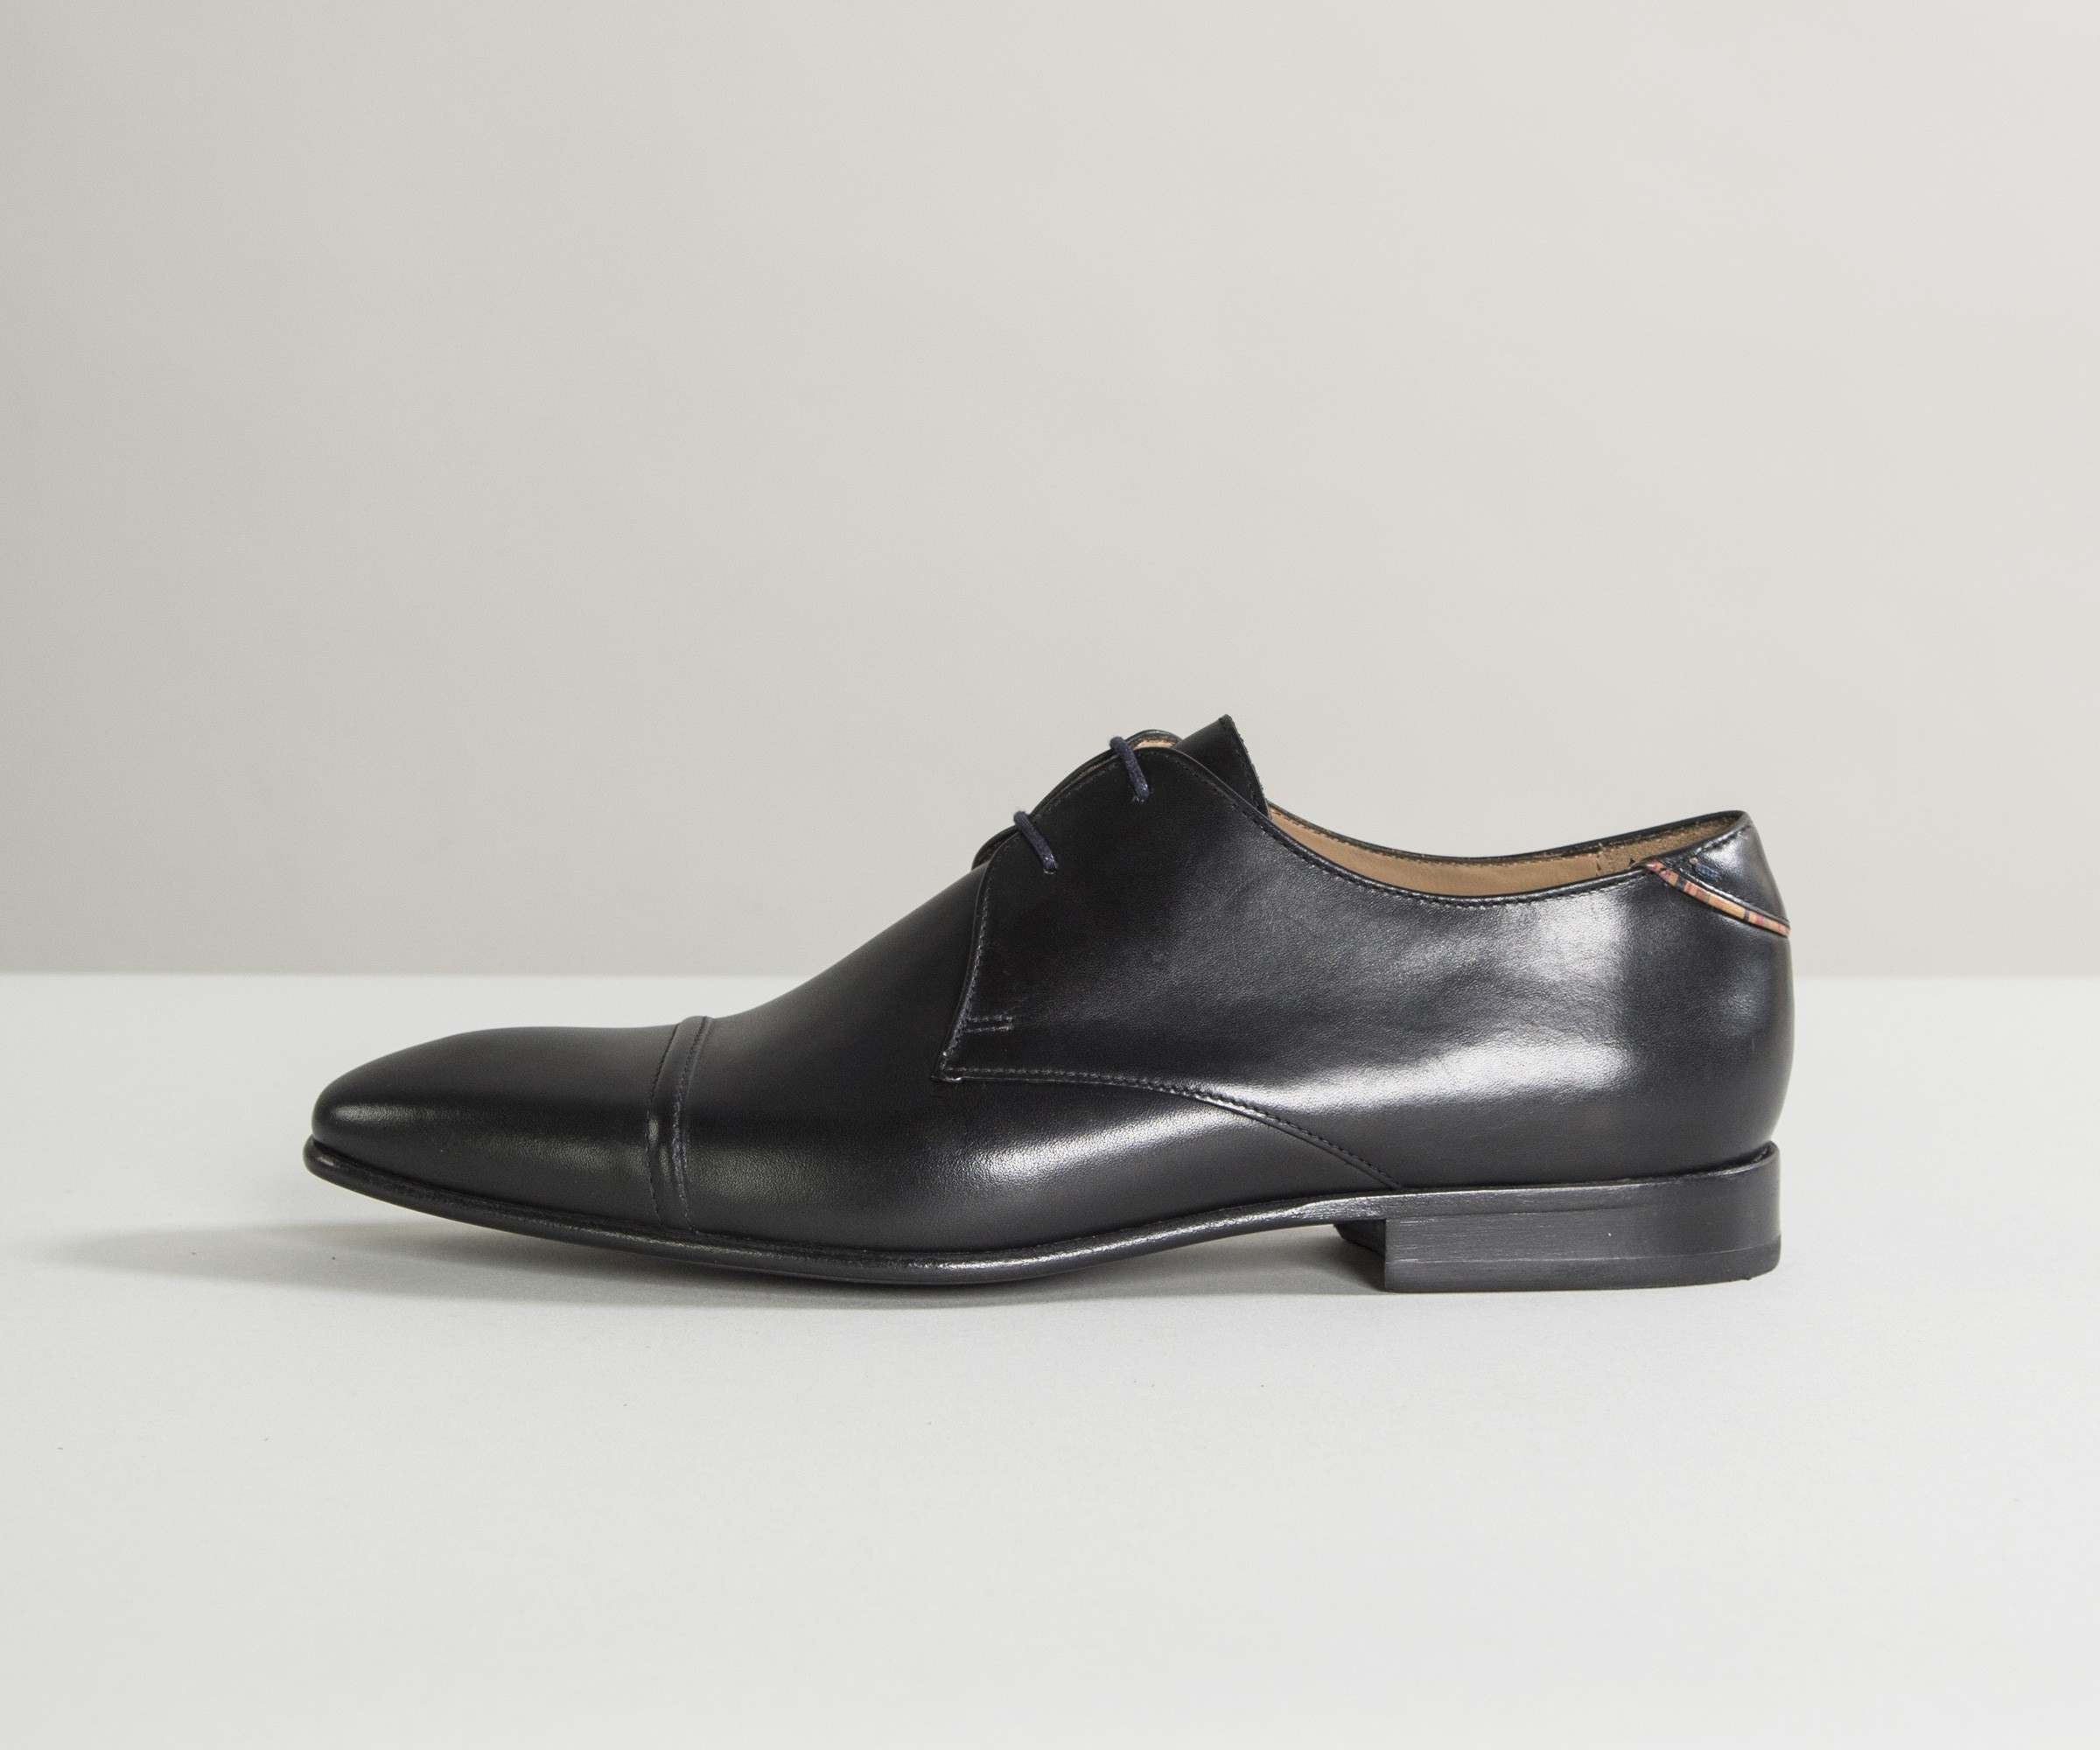 Paul Smith Shoes 'Robin' Formal Shoe Black